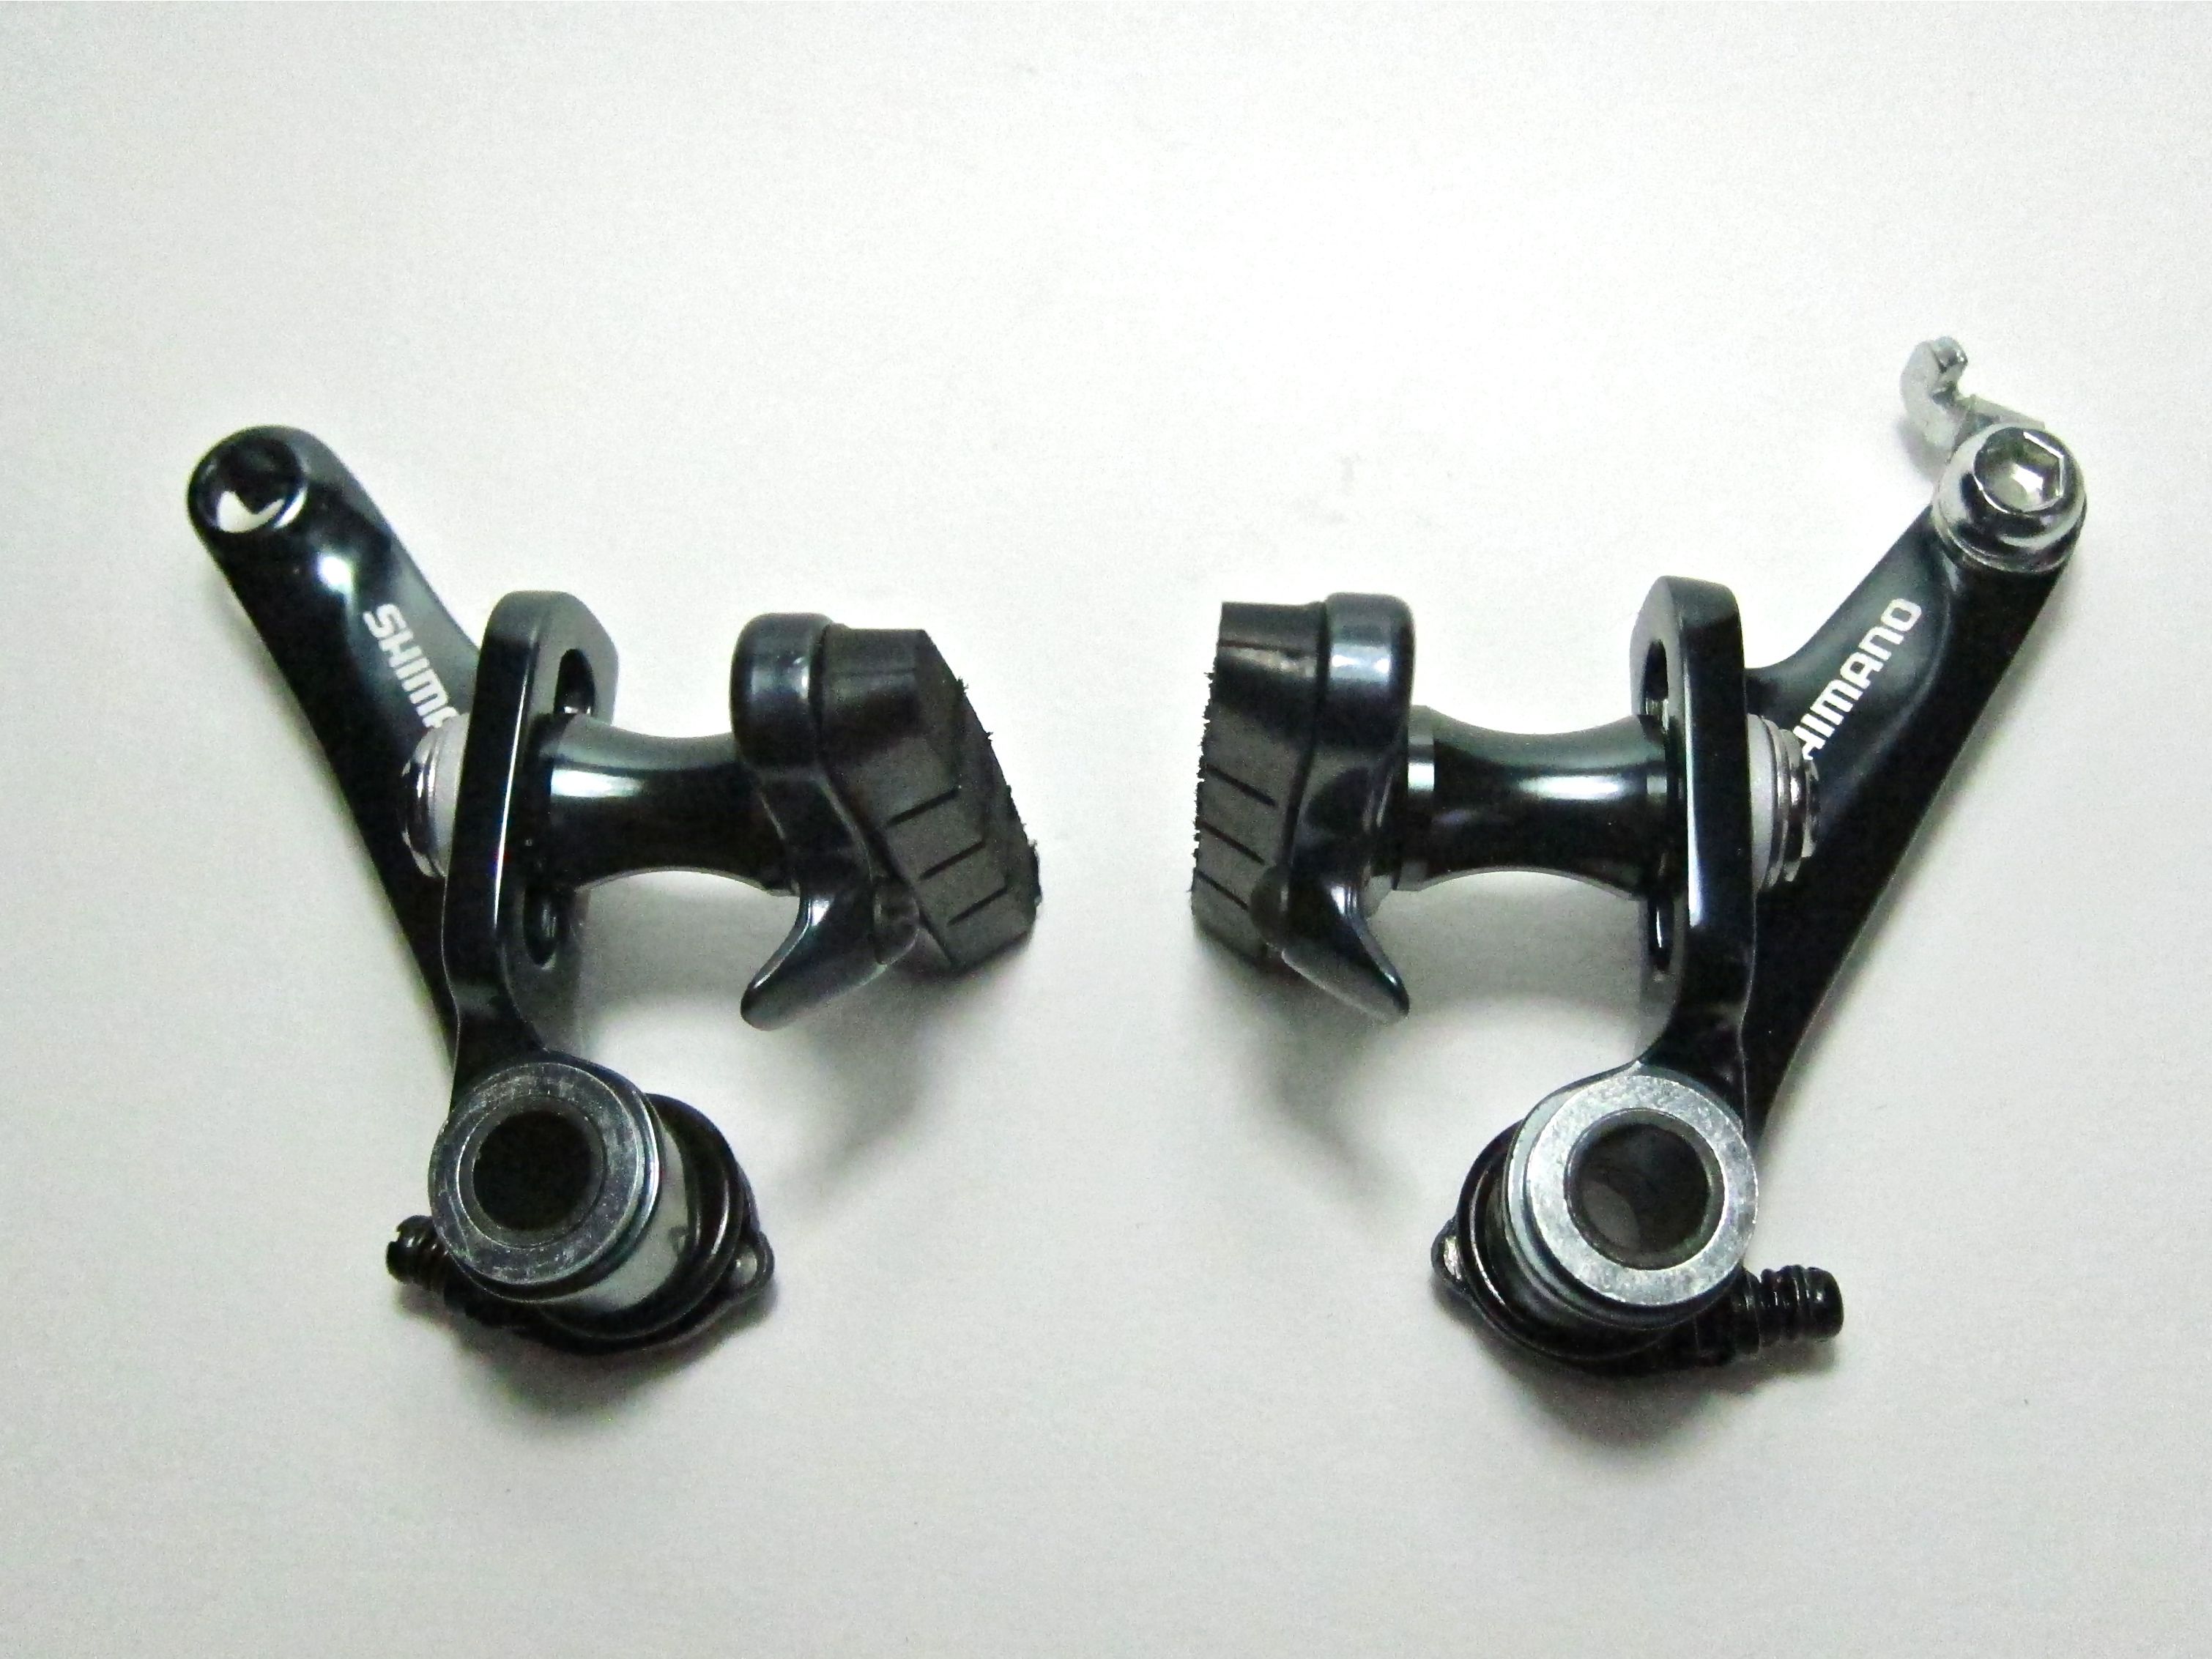 shimano cantilever brake levers